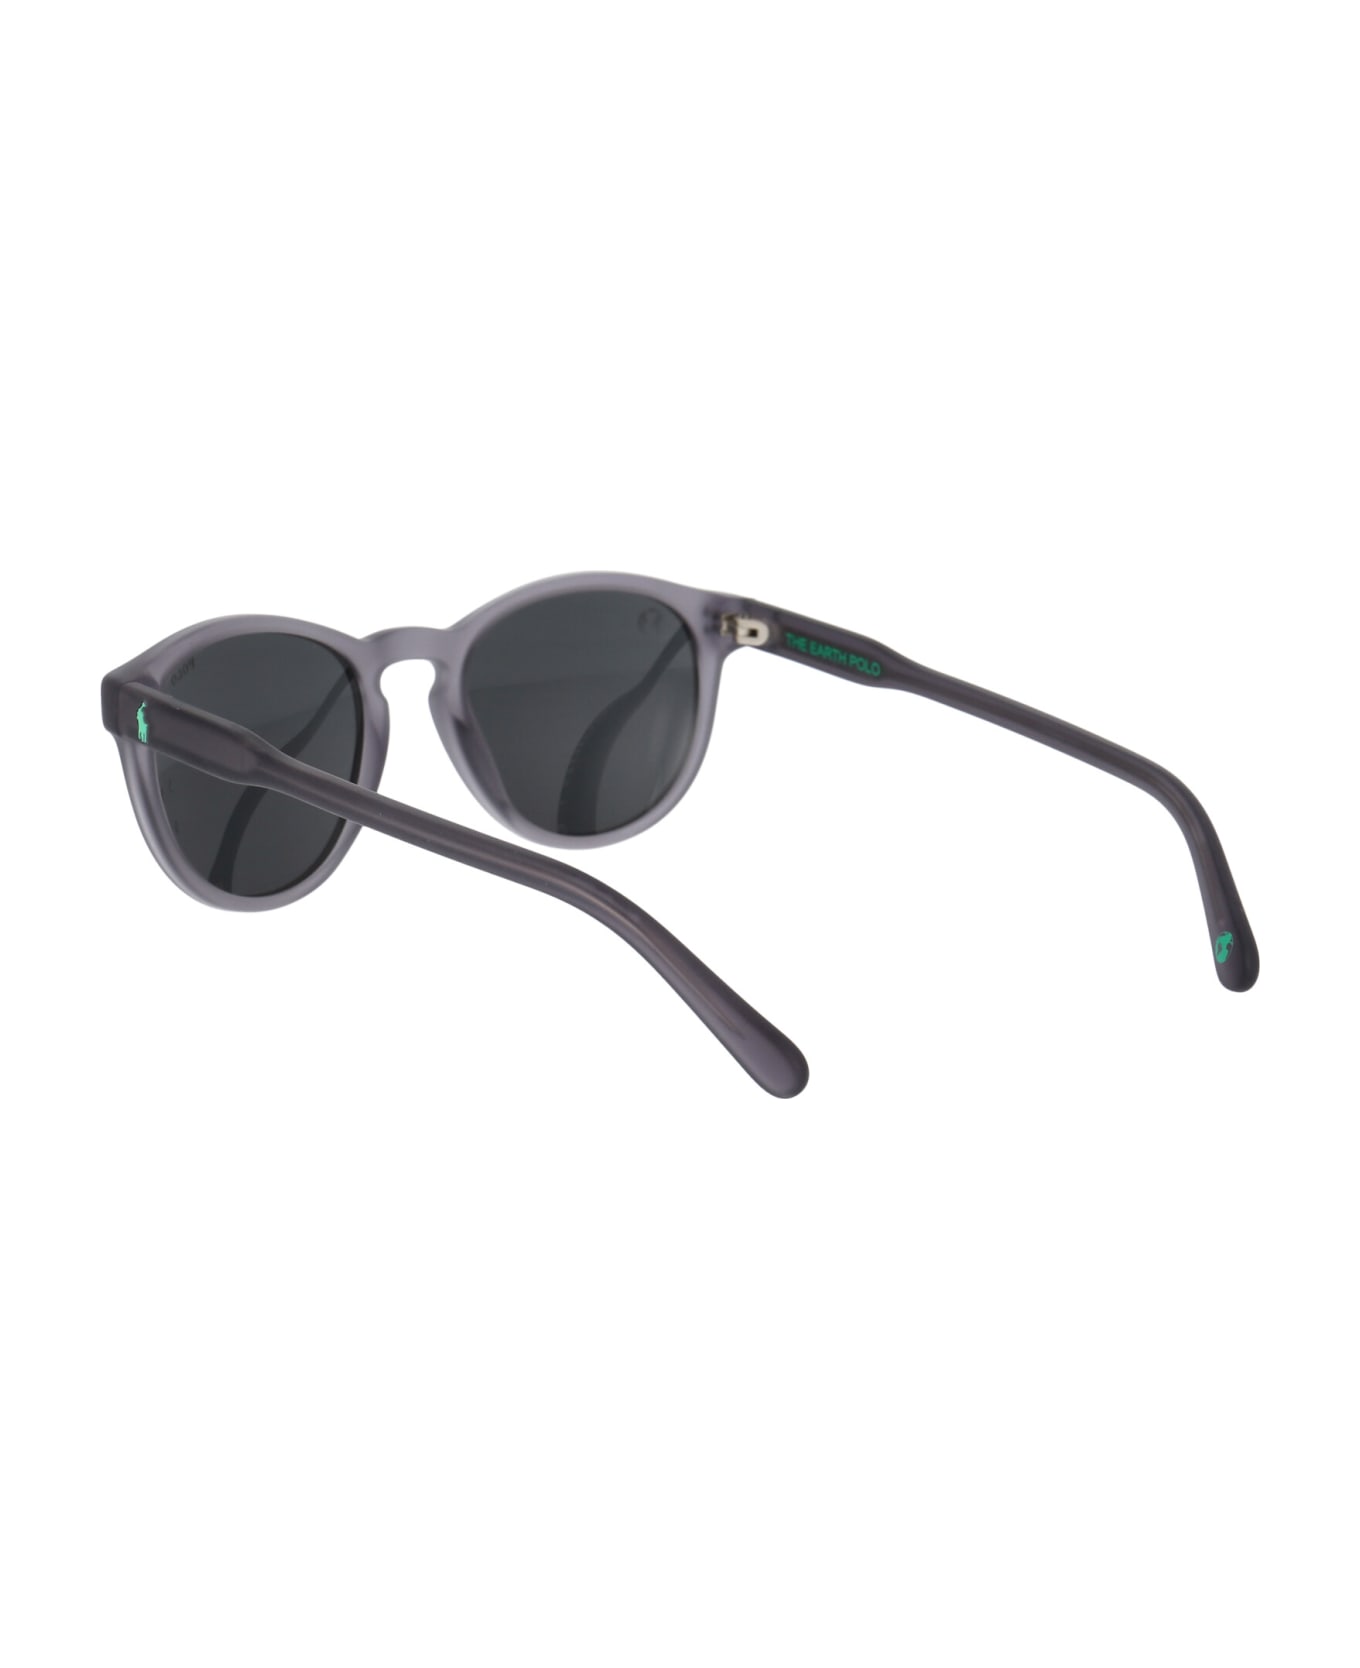 Polo Ralph Lauren 0ph4172 Sunglasses - 595387 MATTE TRANSPARENT DARK GREY サングラス